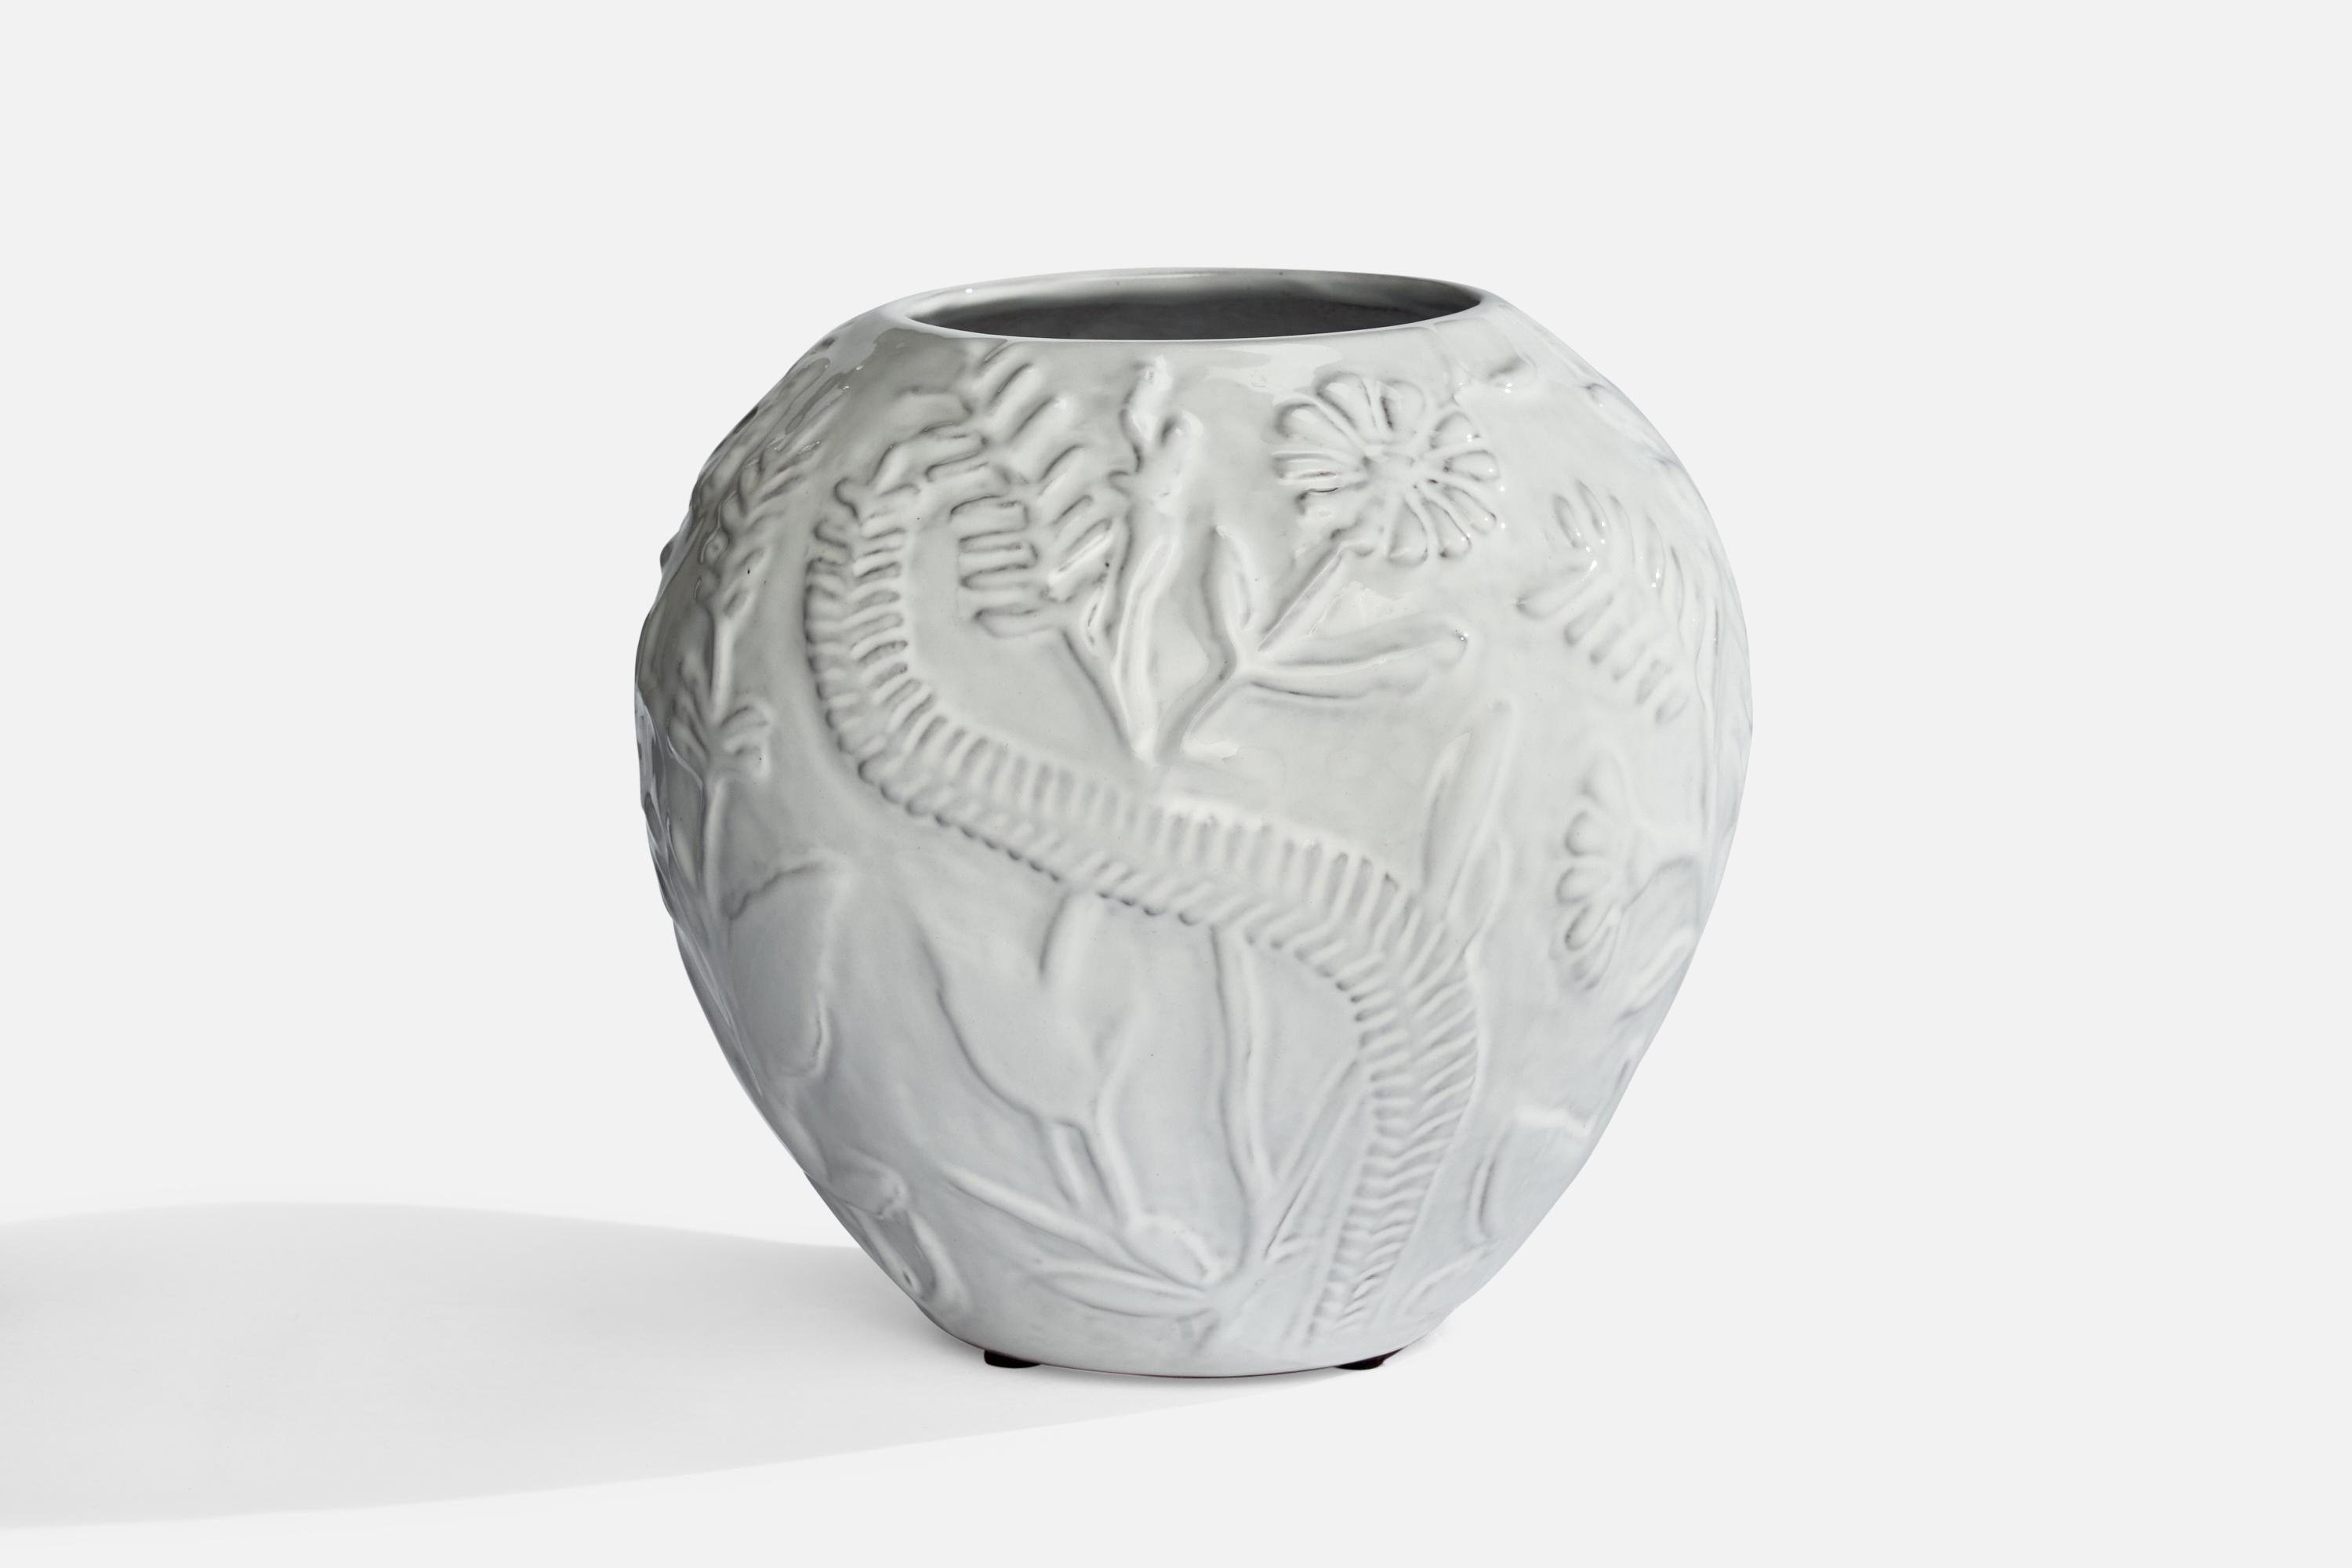 A white-glazed ceramic vase designed and produced in Sweden, 1930s.